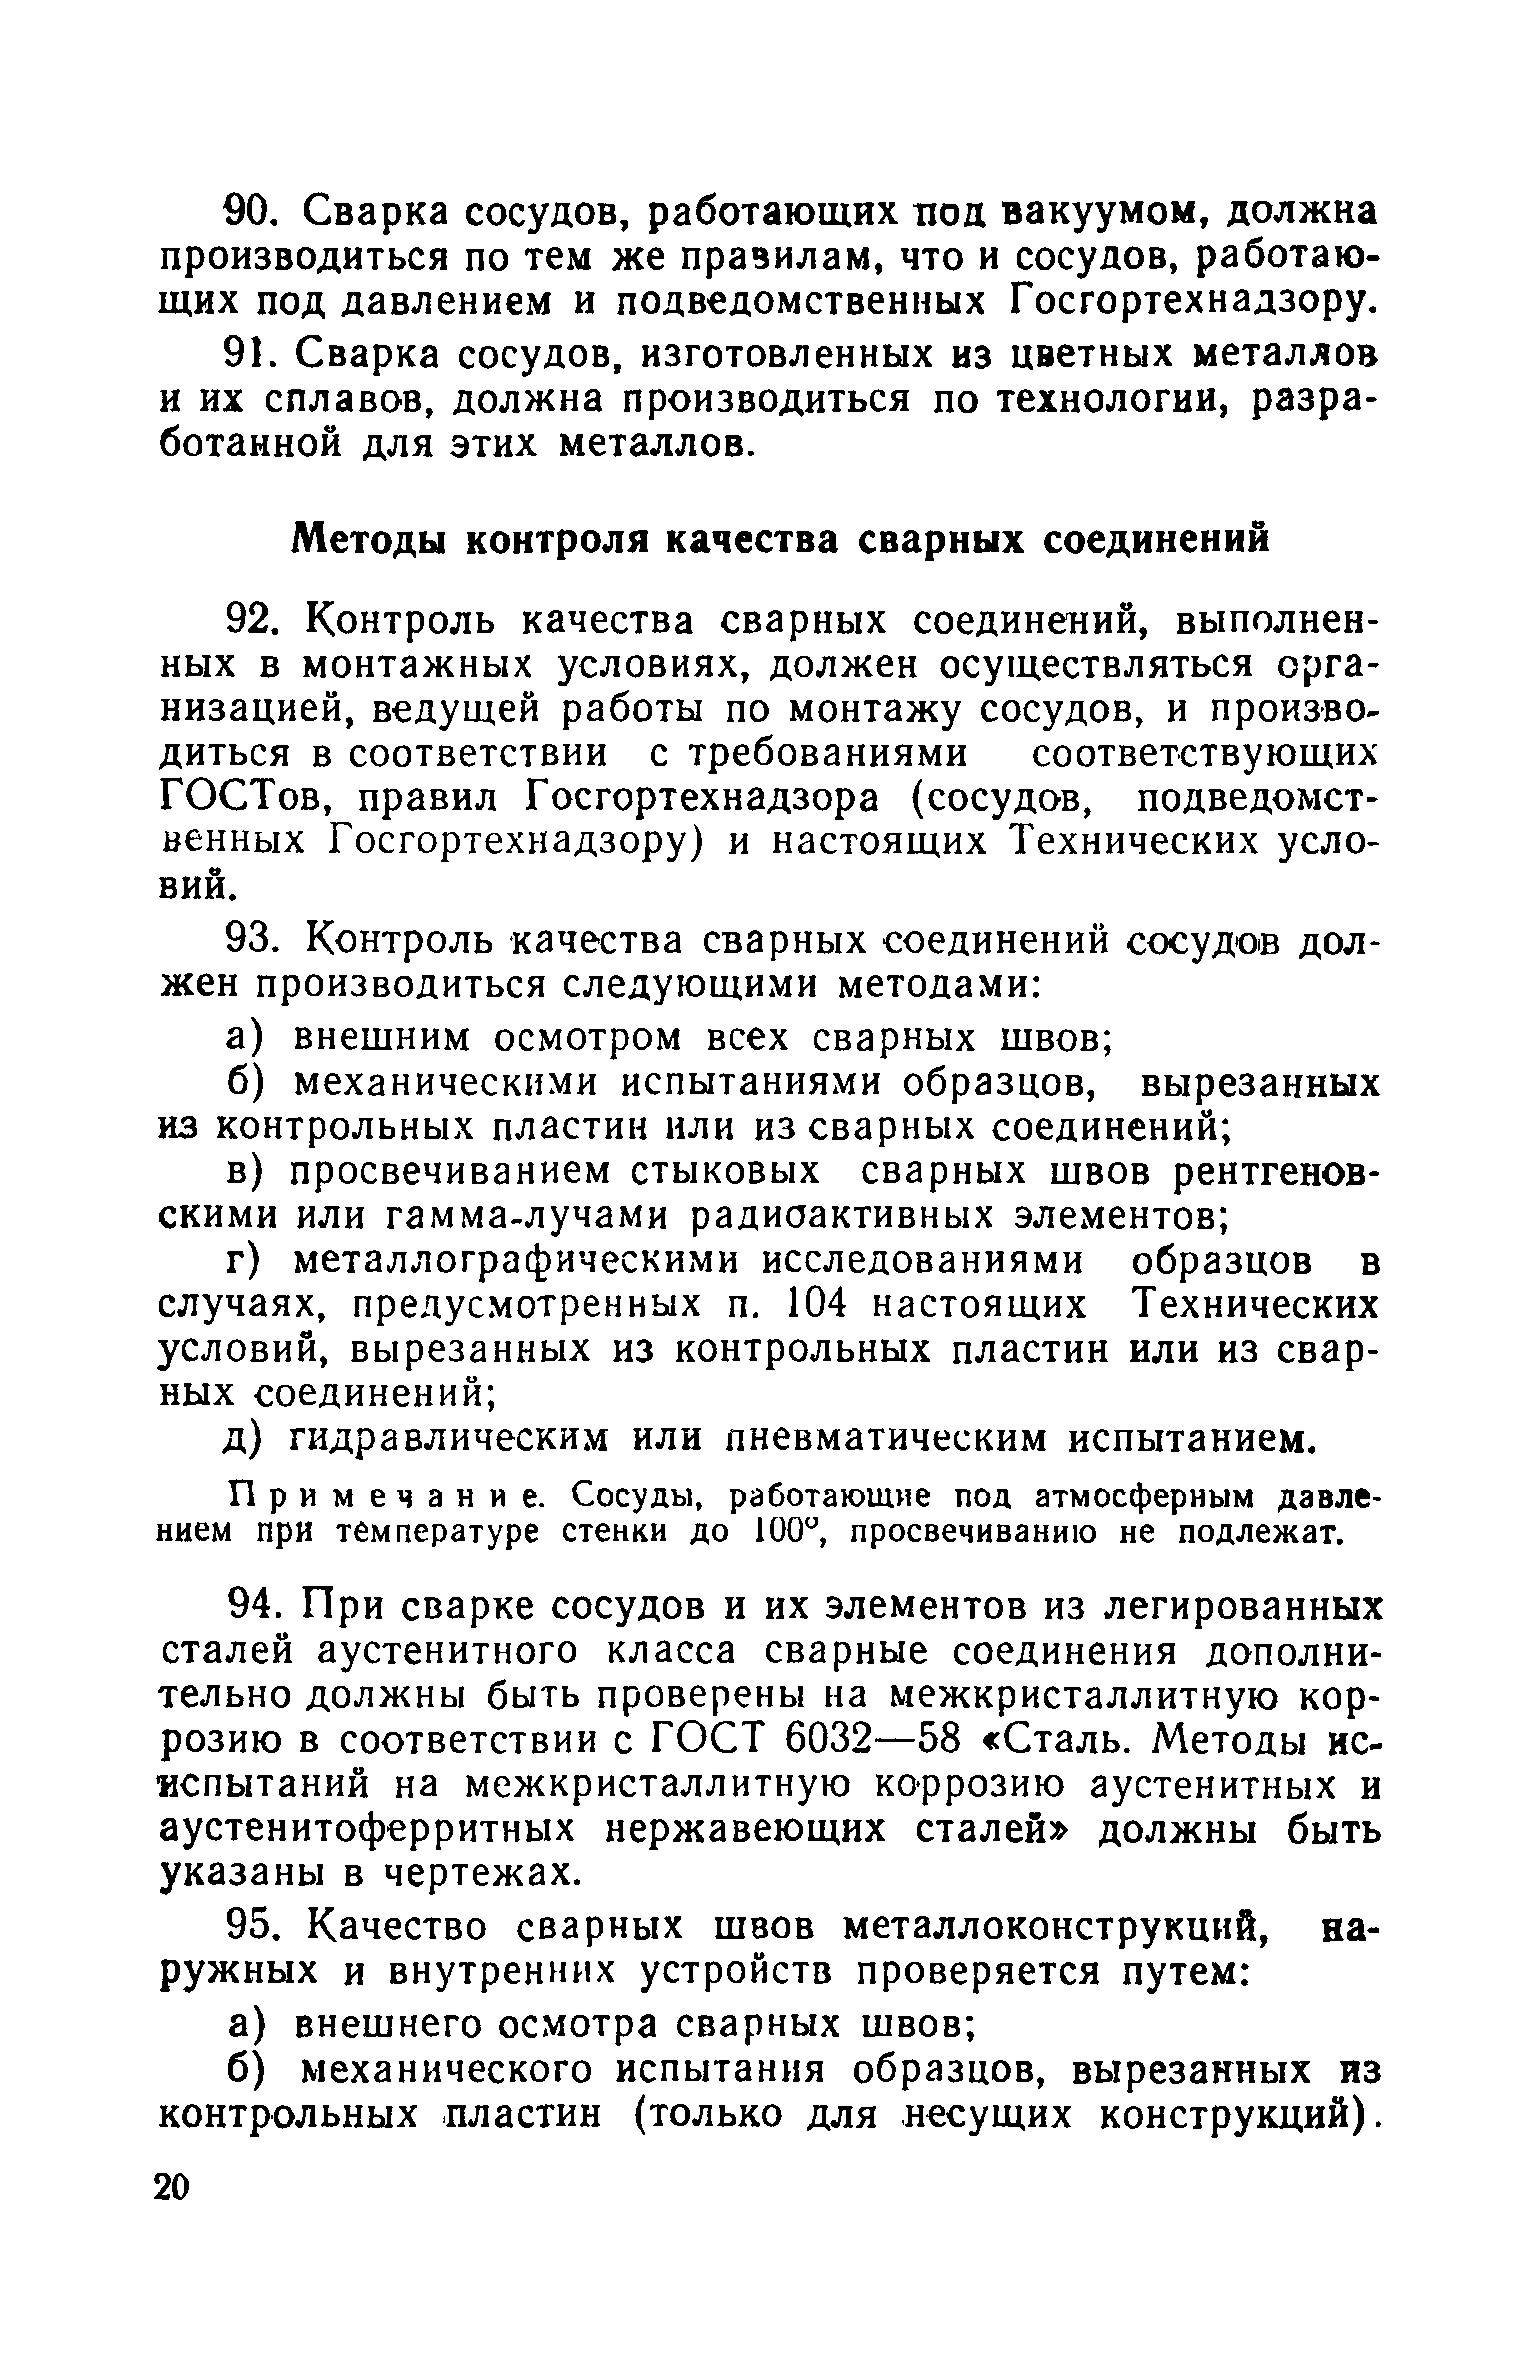 РСН 7-61/Госстрой РСФСР